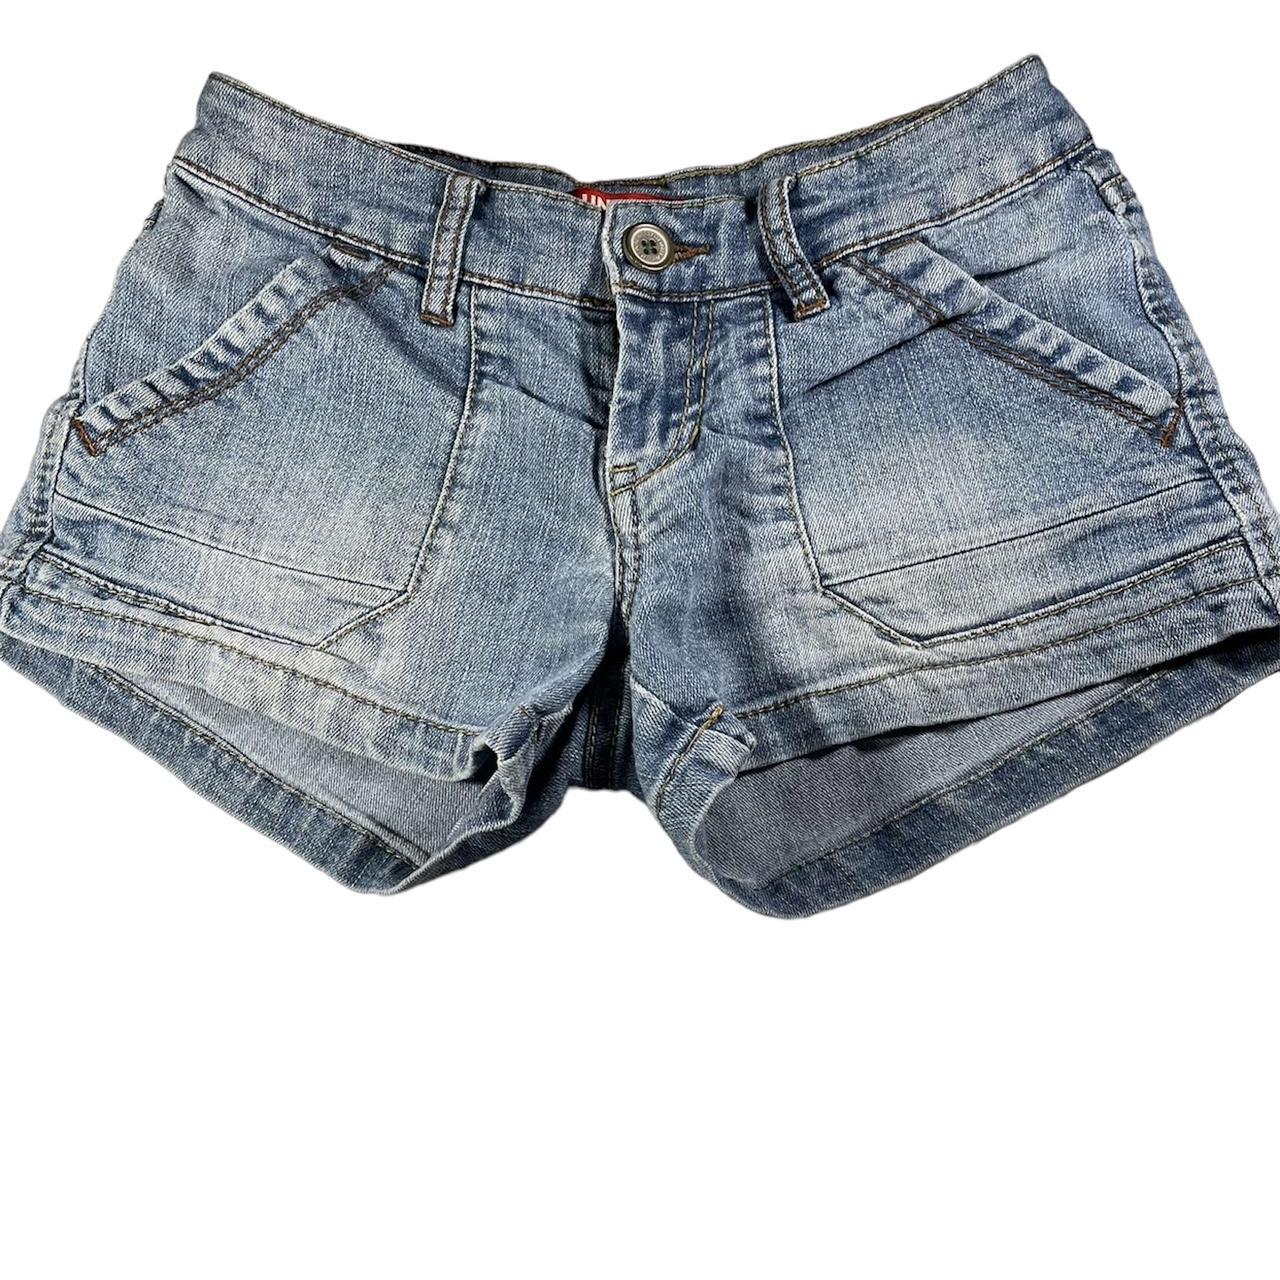 Union Bay shorts * low rise denim jean shorts *... - Depop